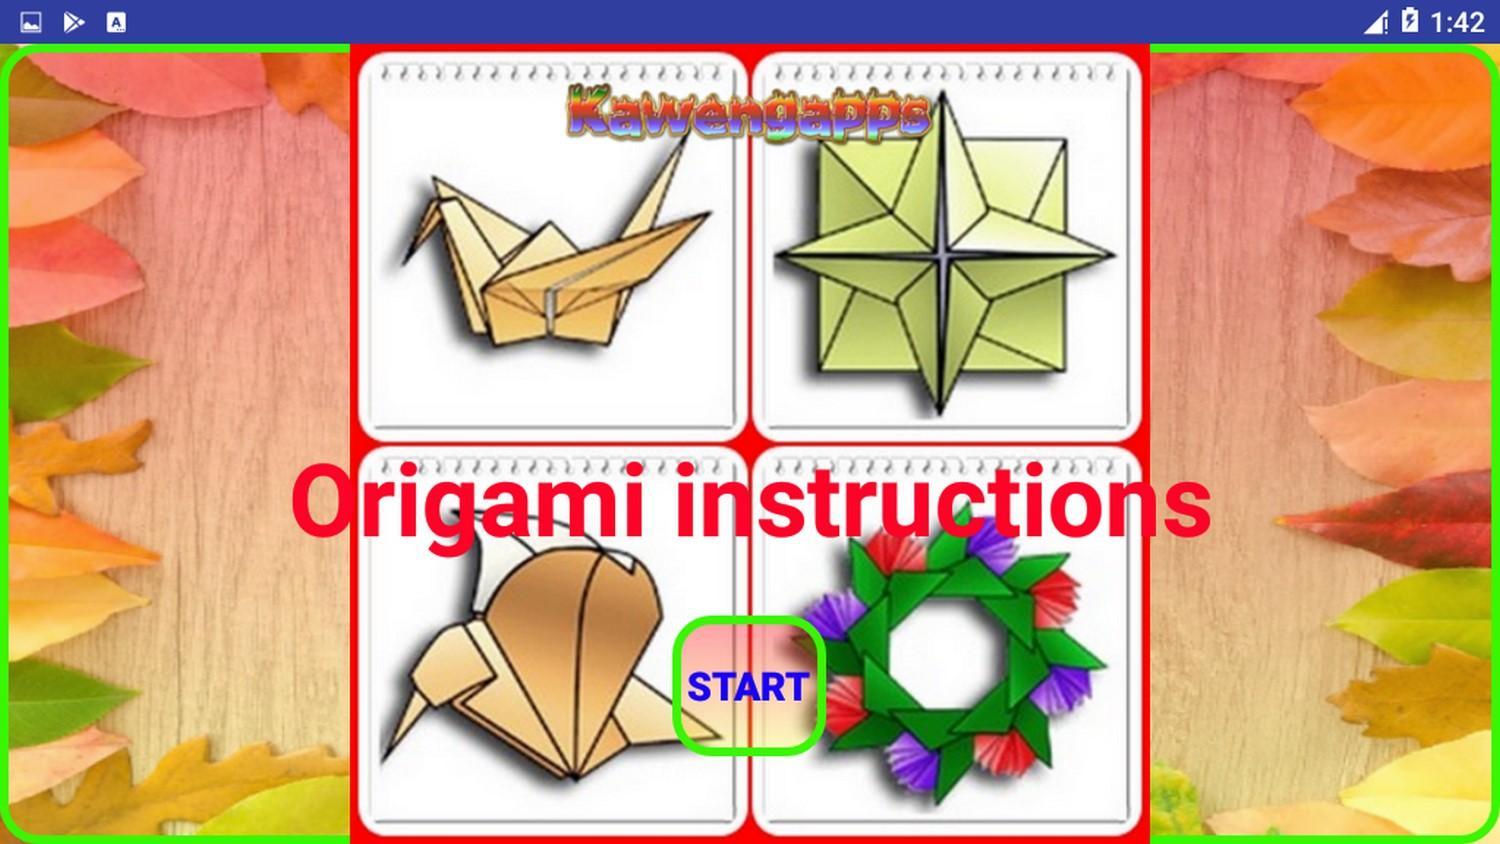 Origami Instructions 2.0 Screenshot 22